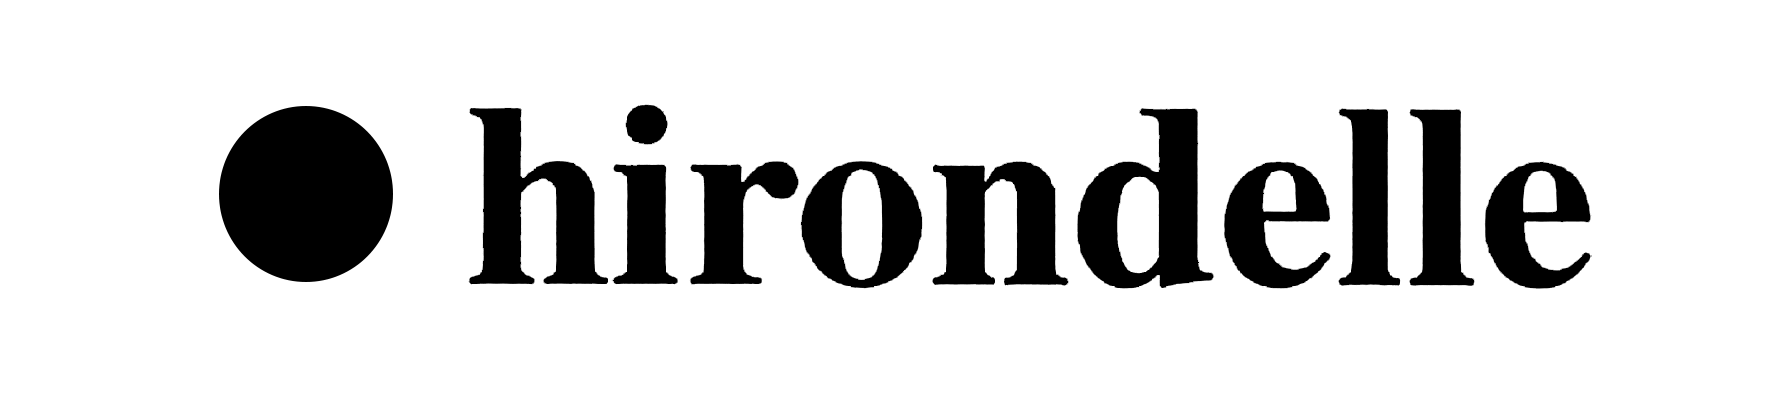 Hirondelle logo